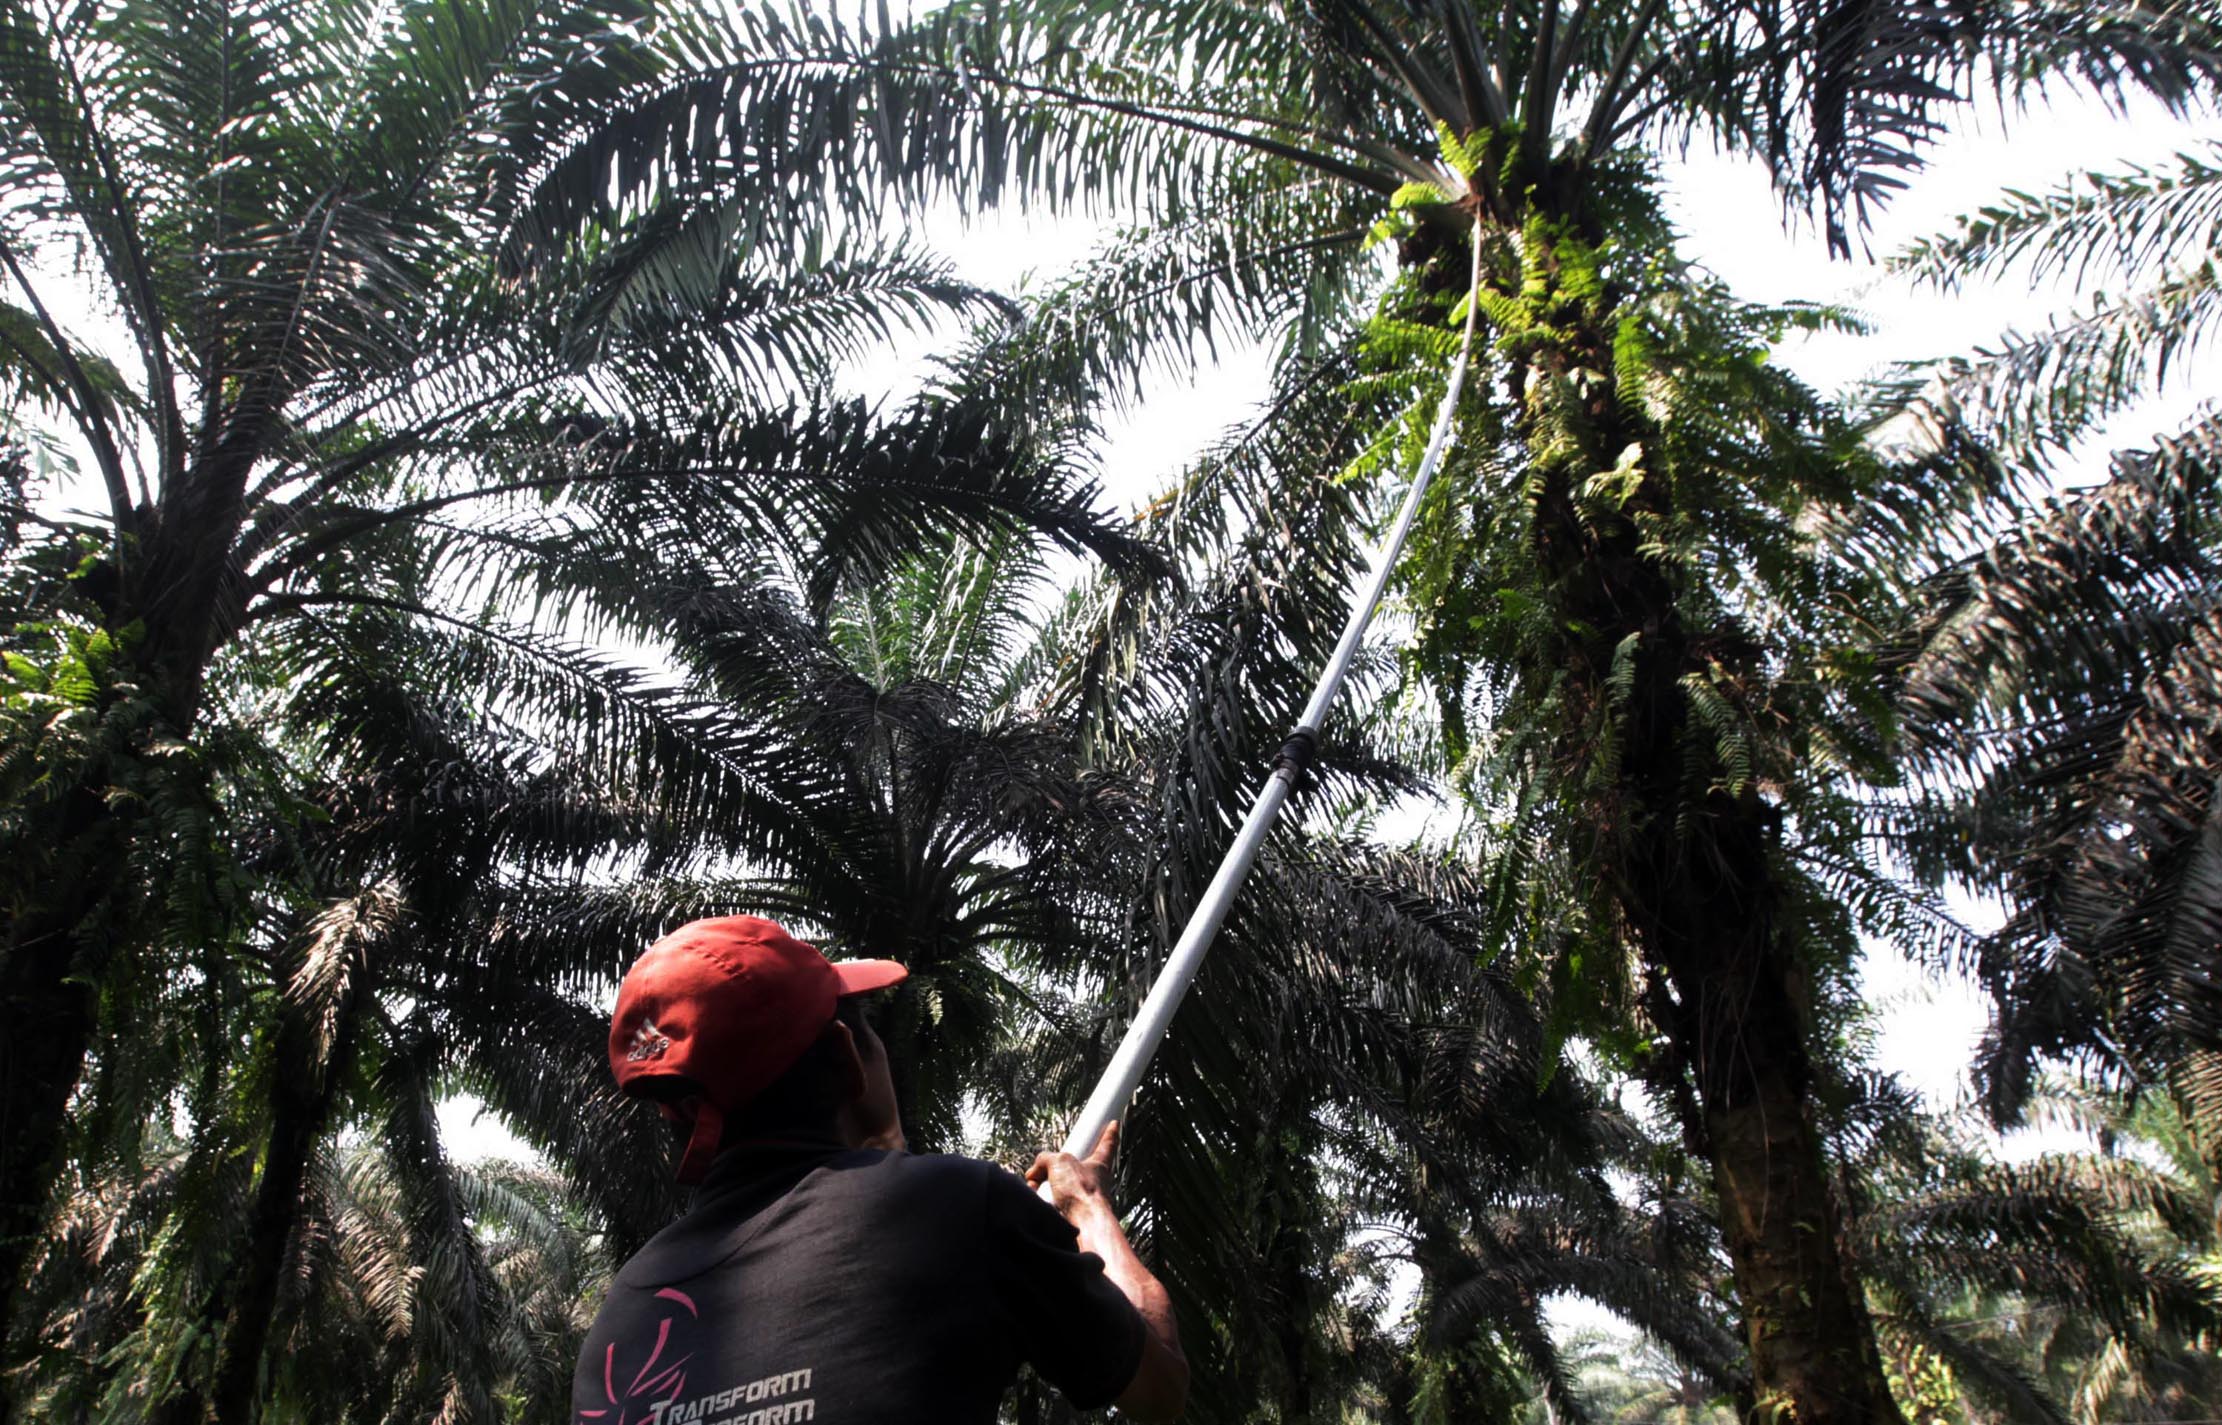 Nampak seorang petani tengah melakukan panen tanaman kelapa sawit di kawasan Bogor Jawa Barat, Kamis 28 Mei 2021. Foto : Panji Asmoro/TrenAsia